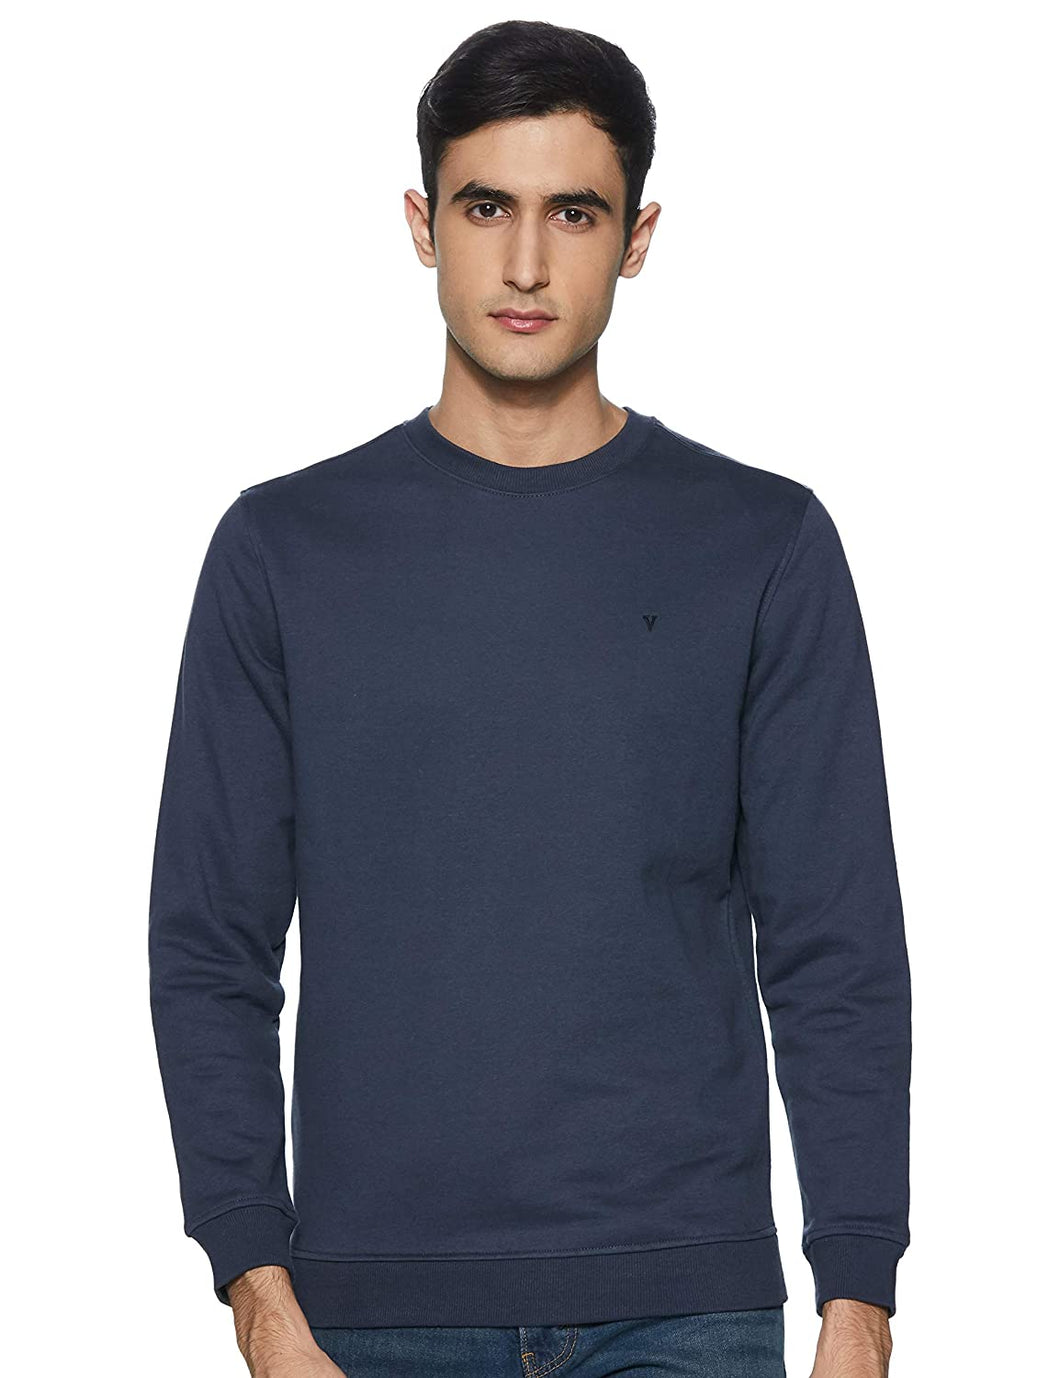 100 % Cotton Sweatshirt For Men In Blue Color